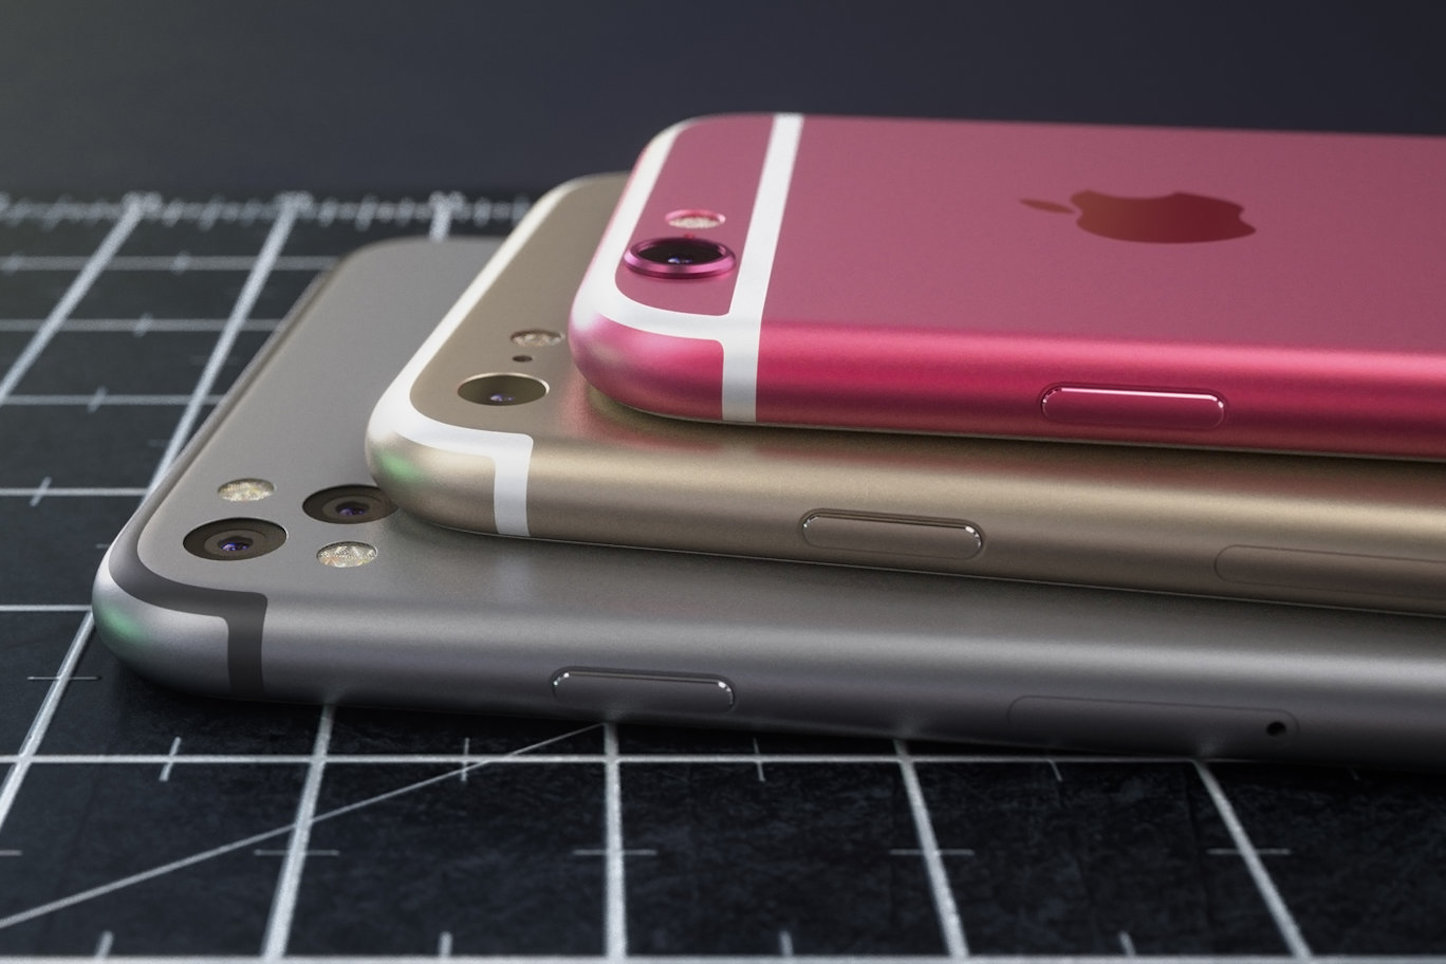 iphone5se-pink-color-concept-image-3.jpg